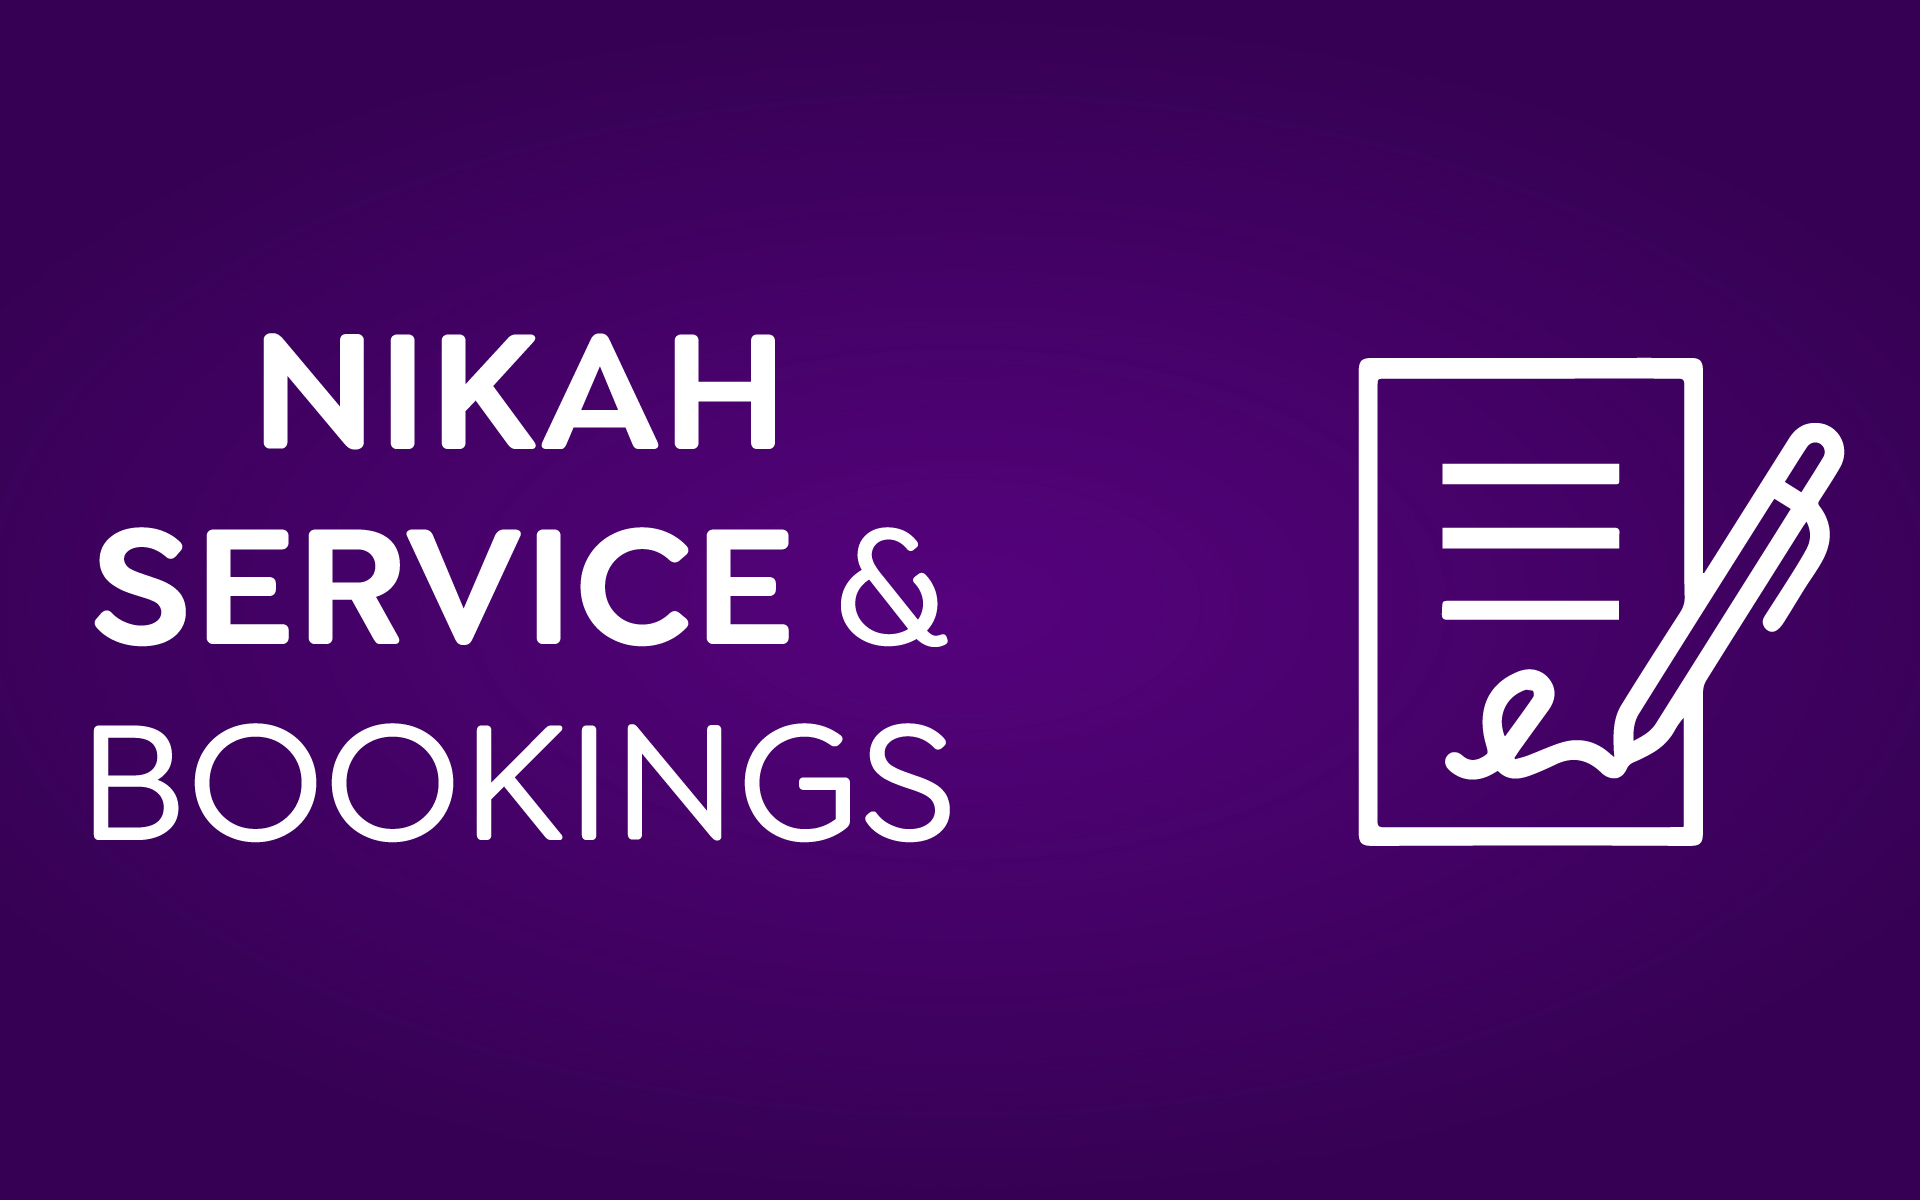 Nikah Service & Bookings